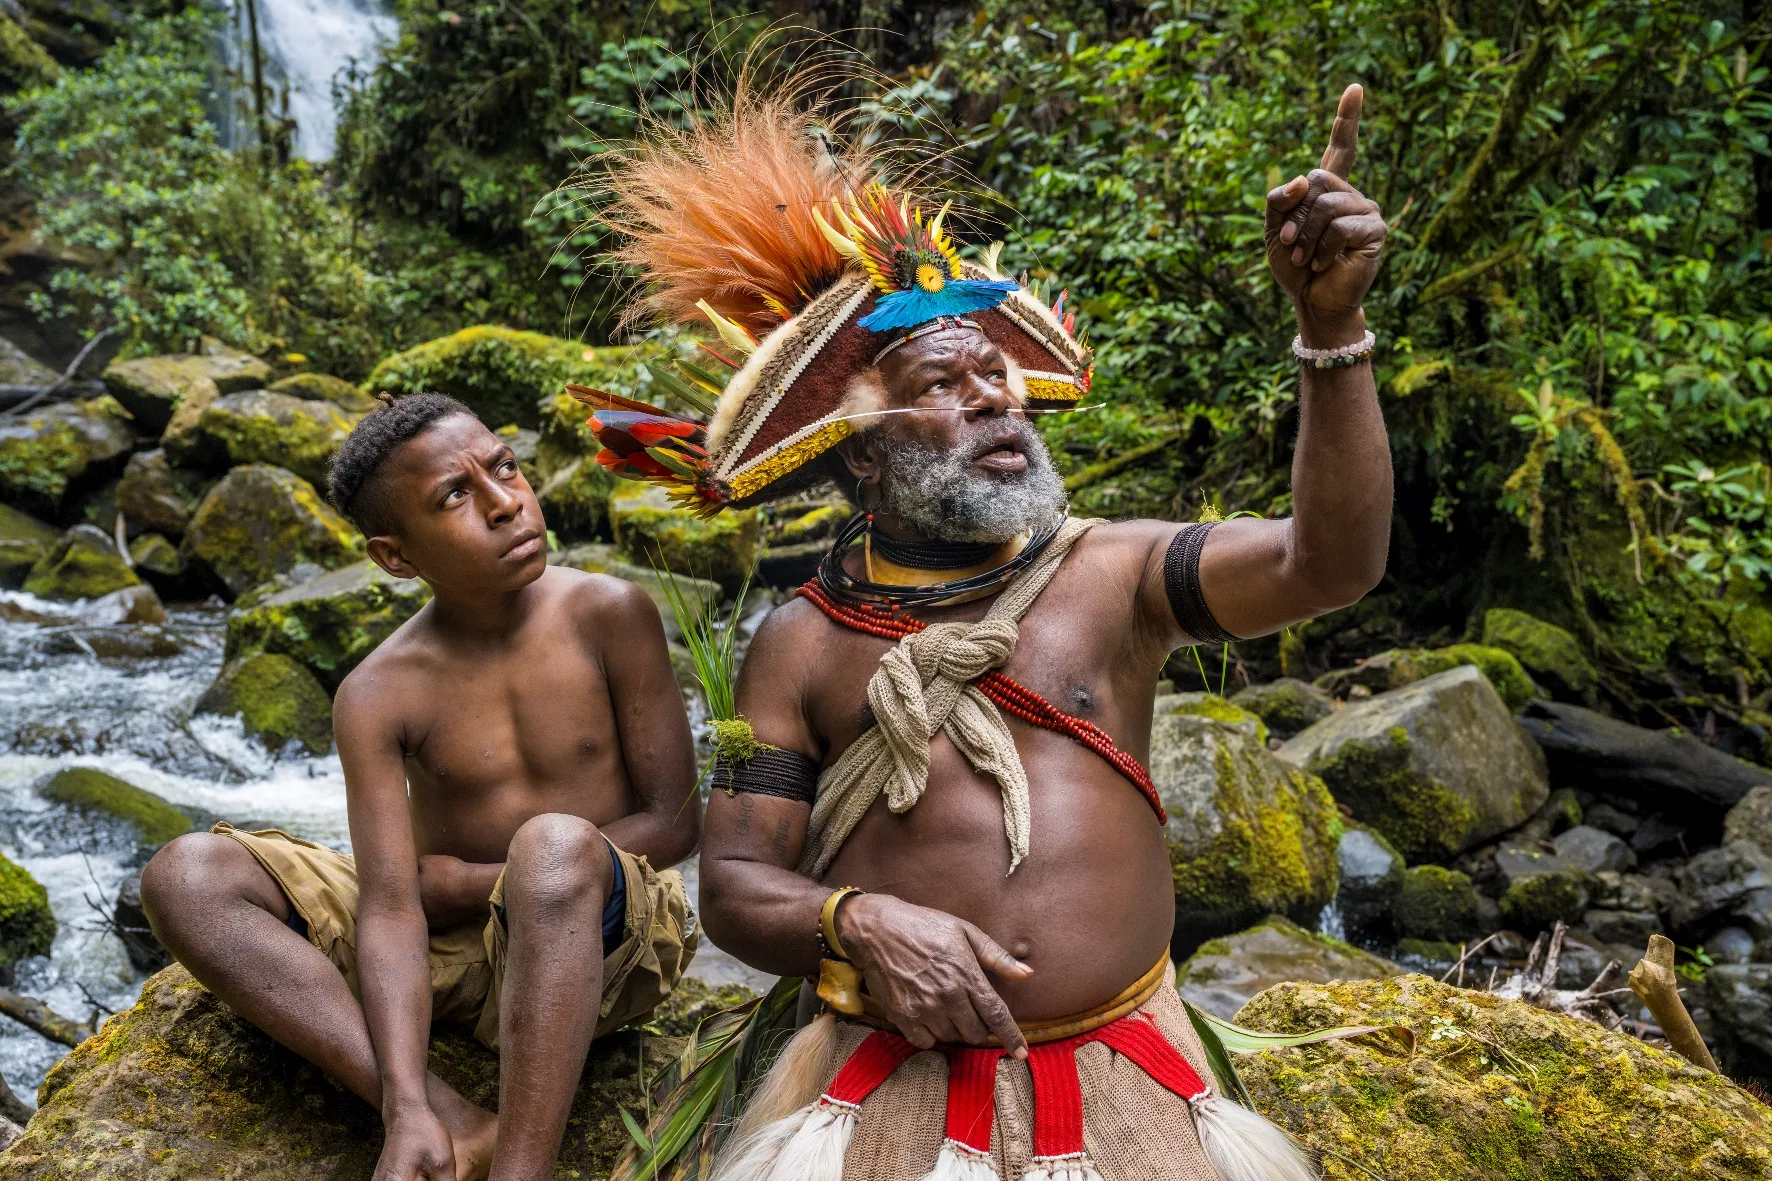 Odisseia dá voz a líderes indígenas na série Guardiães da Floresta